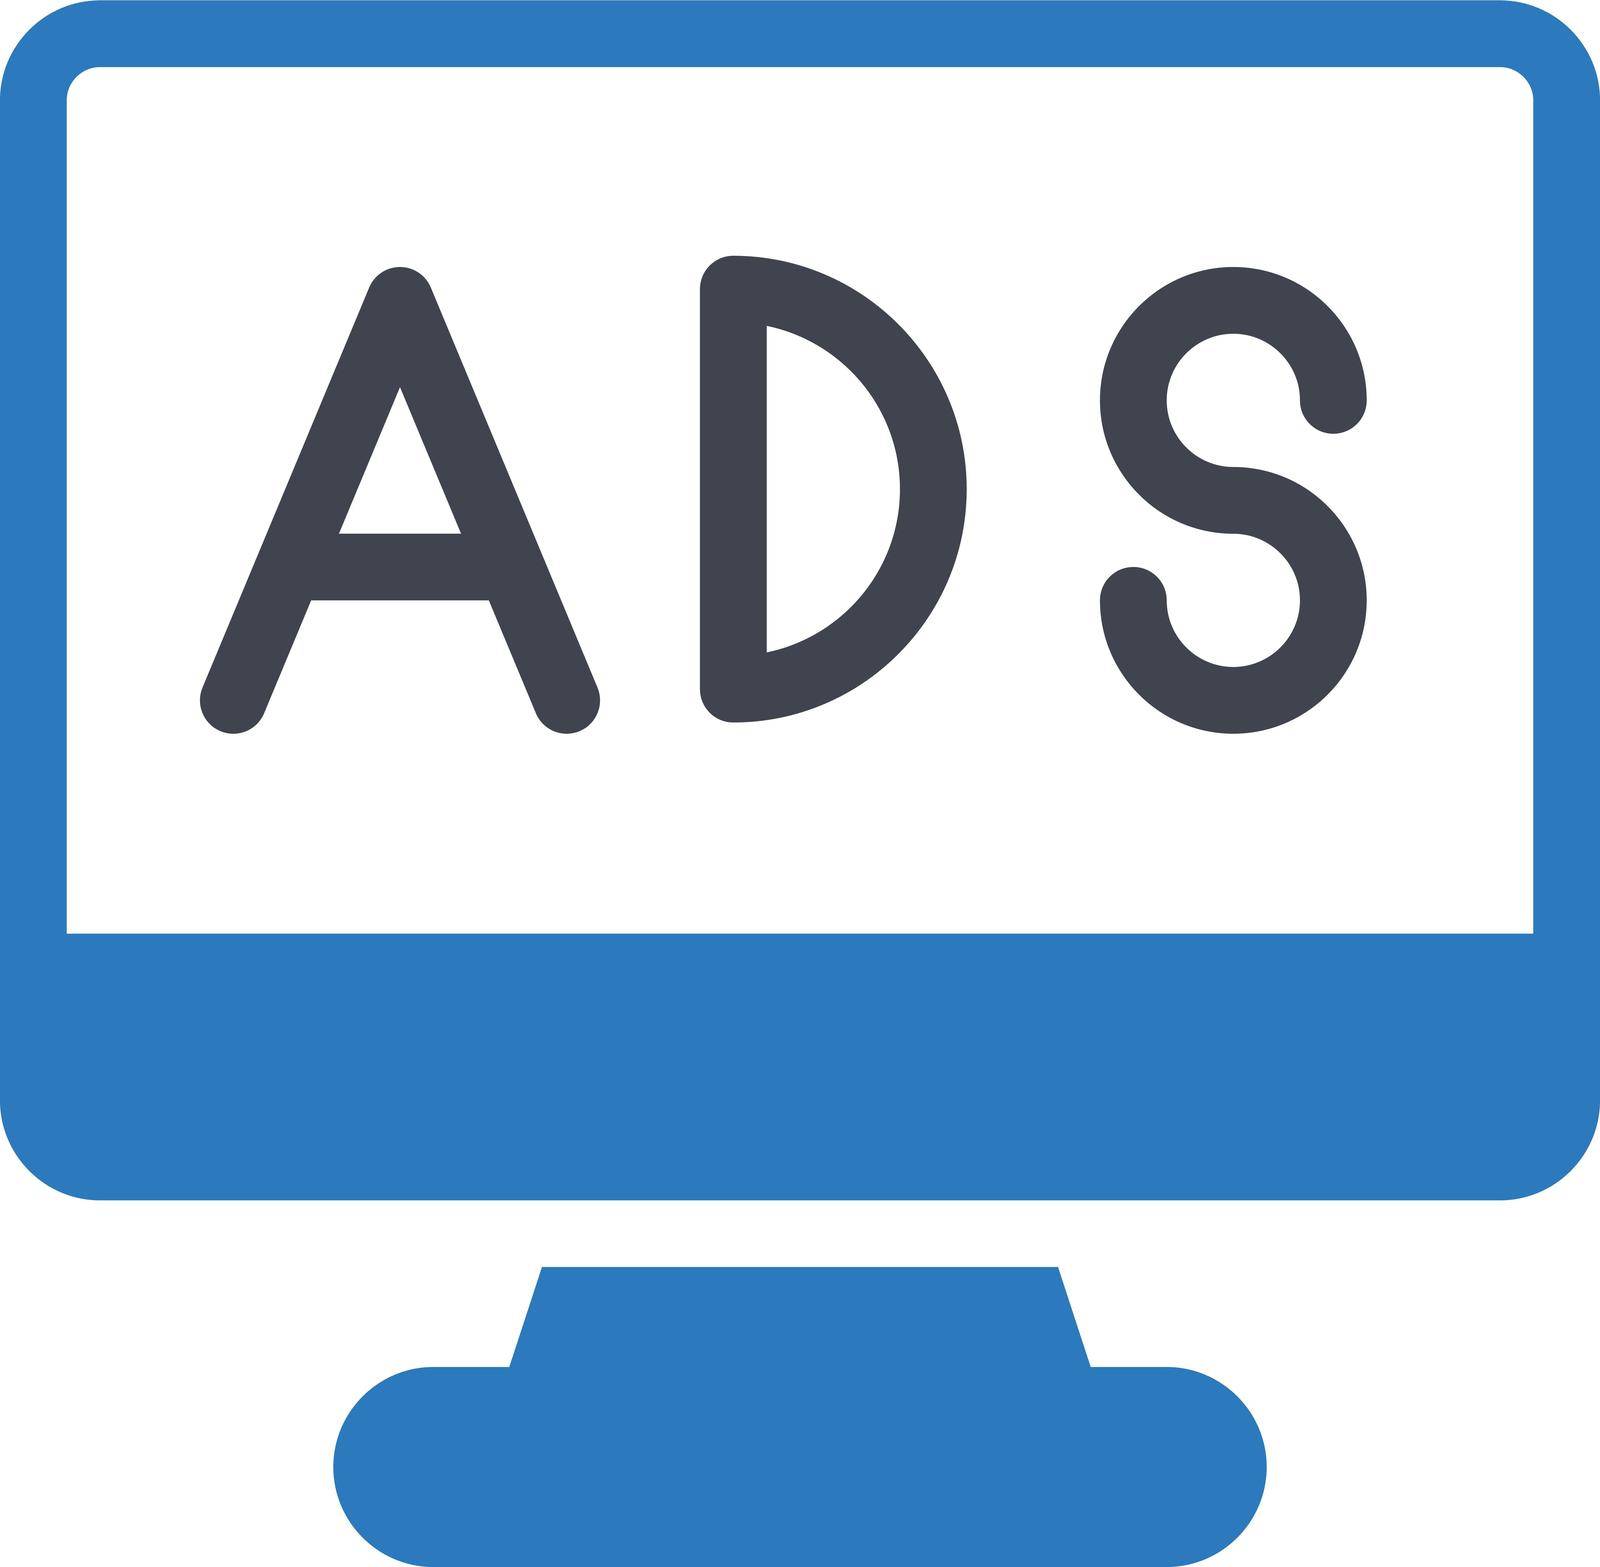 ads by FlaticonsDesign